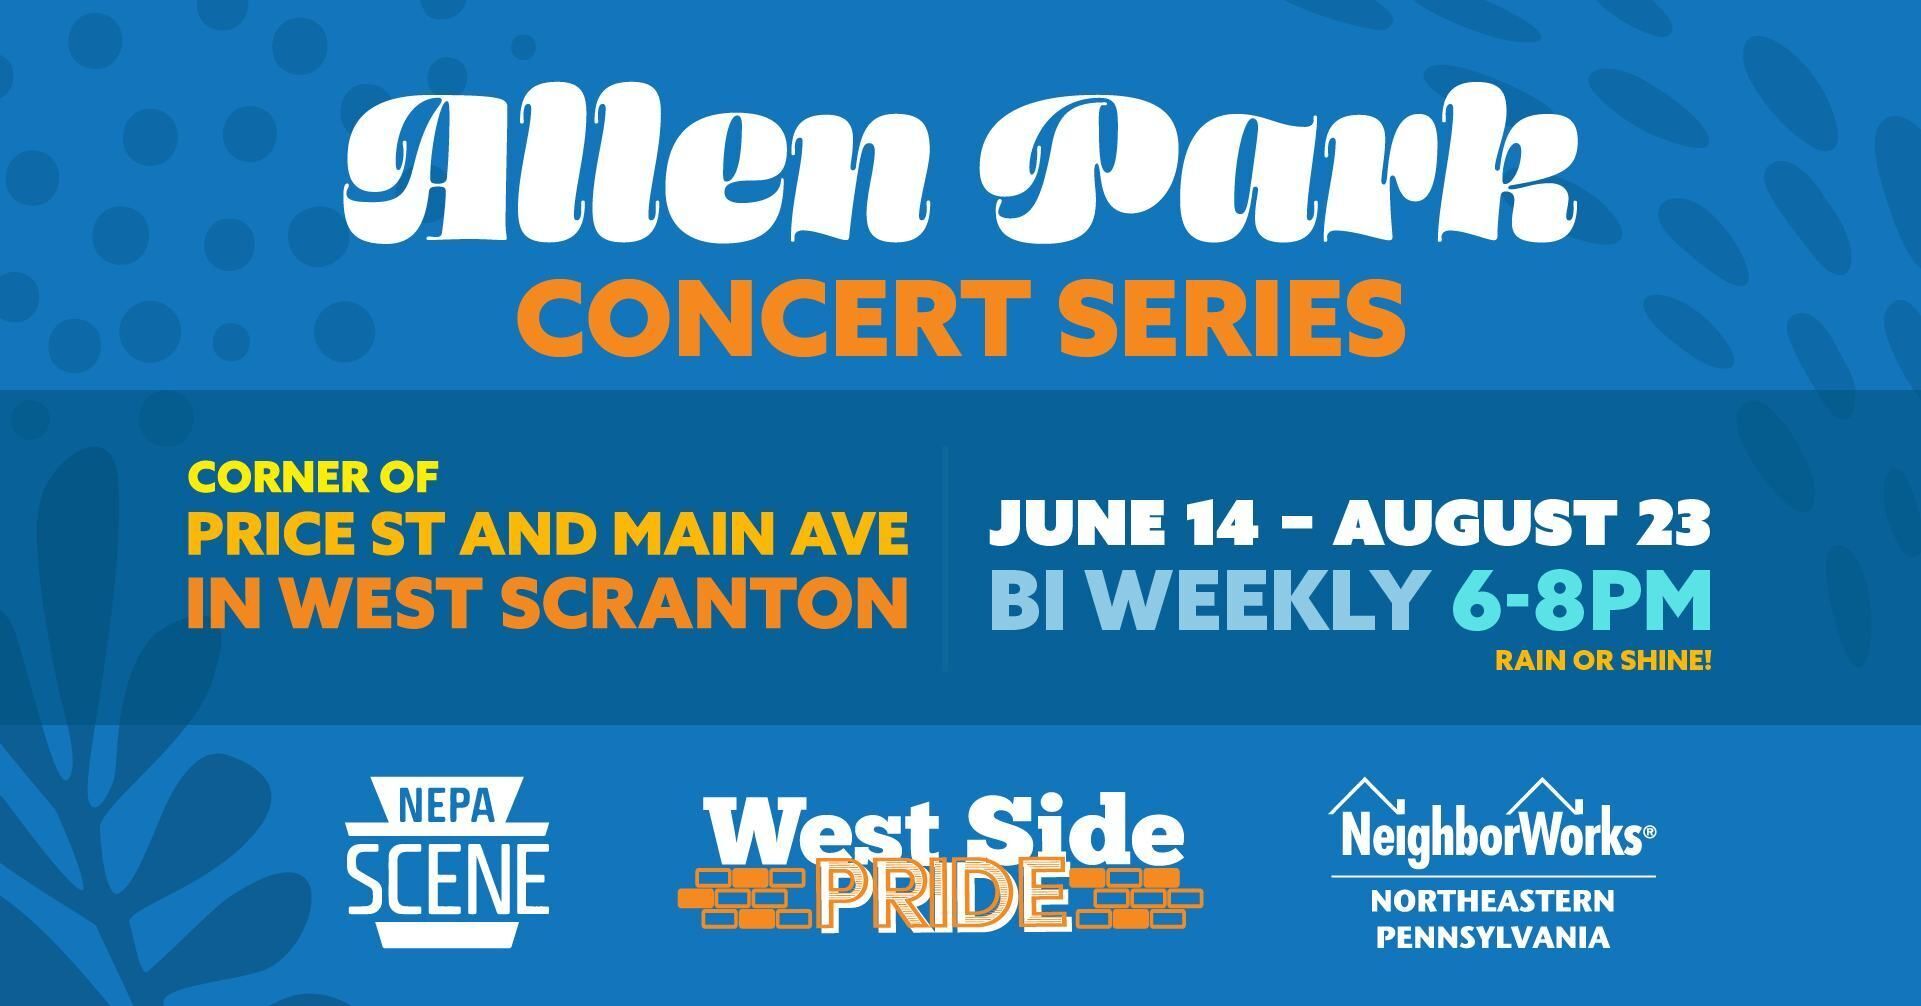 NeighborWorks announces second annual Allen Park concert series